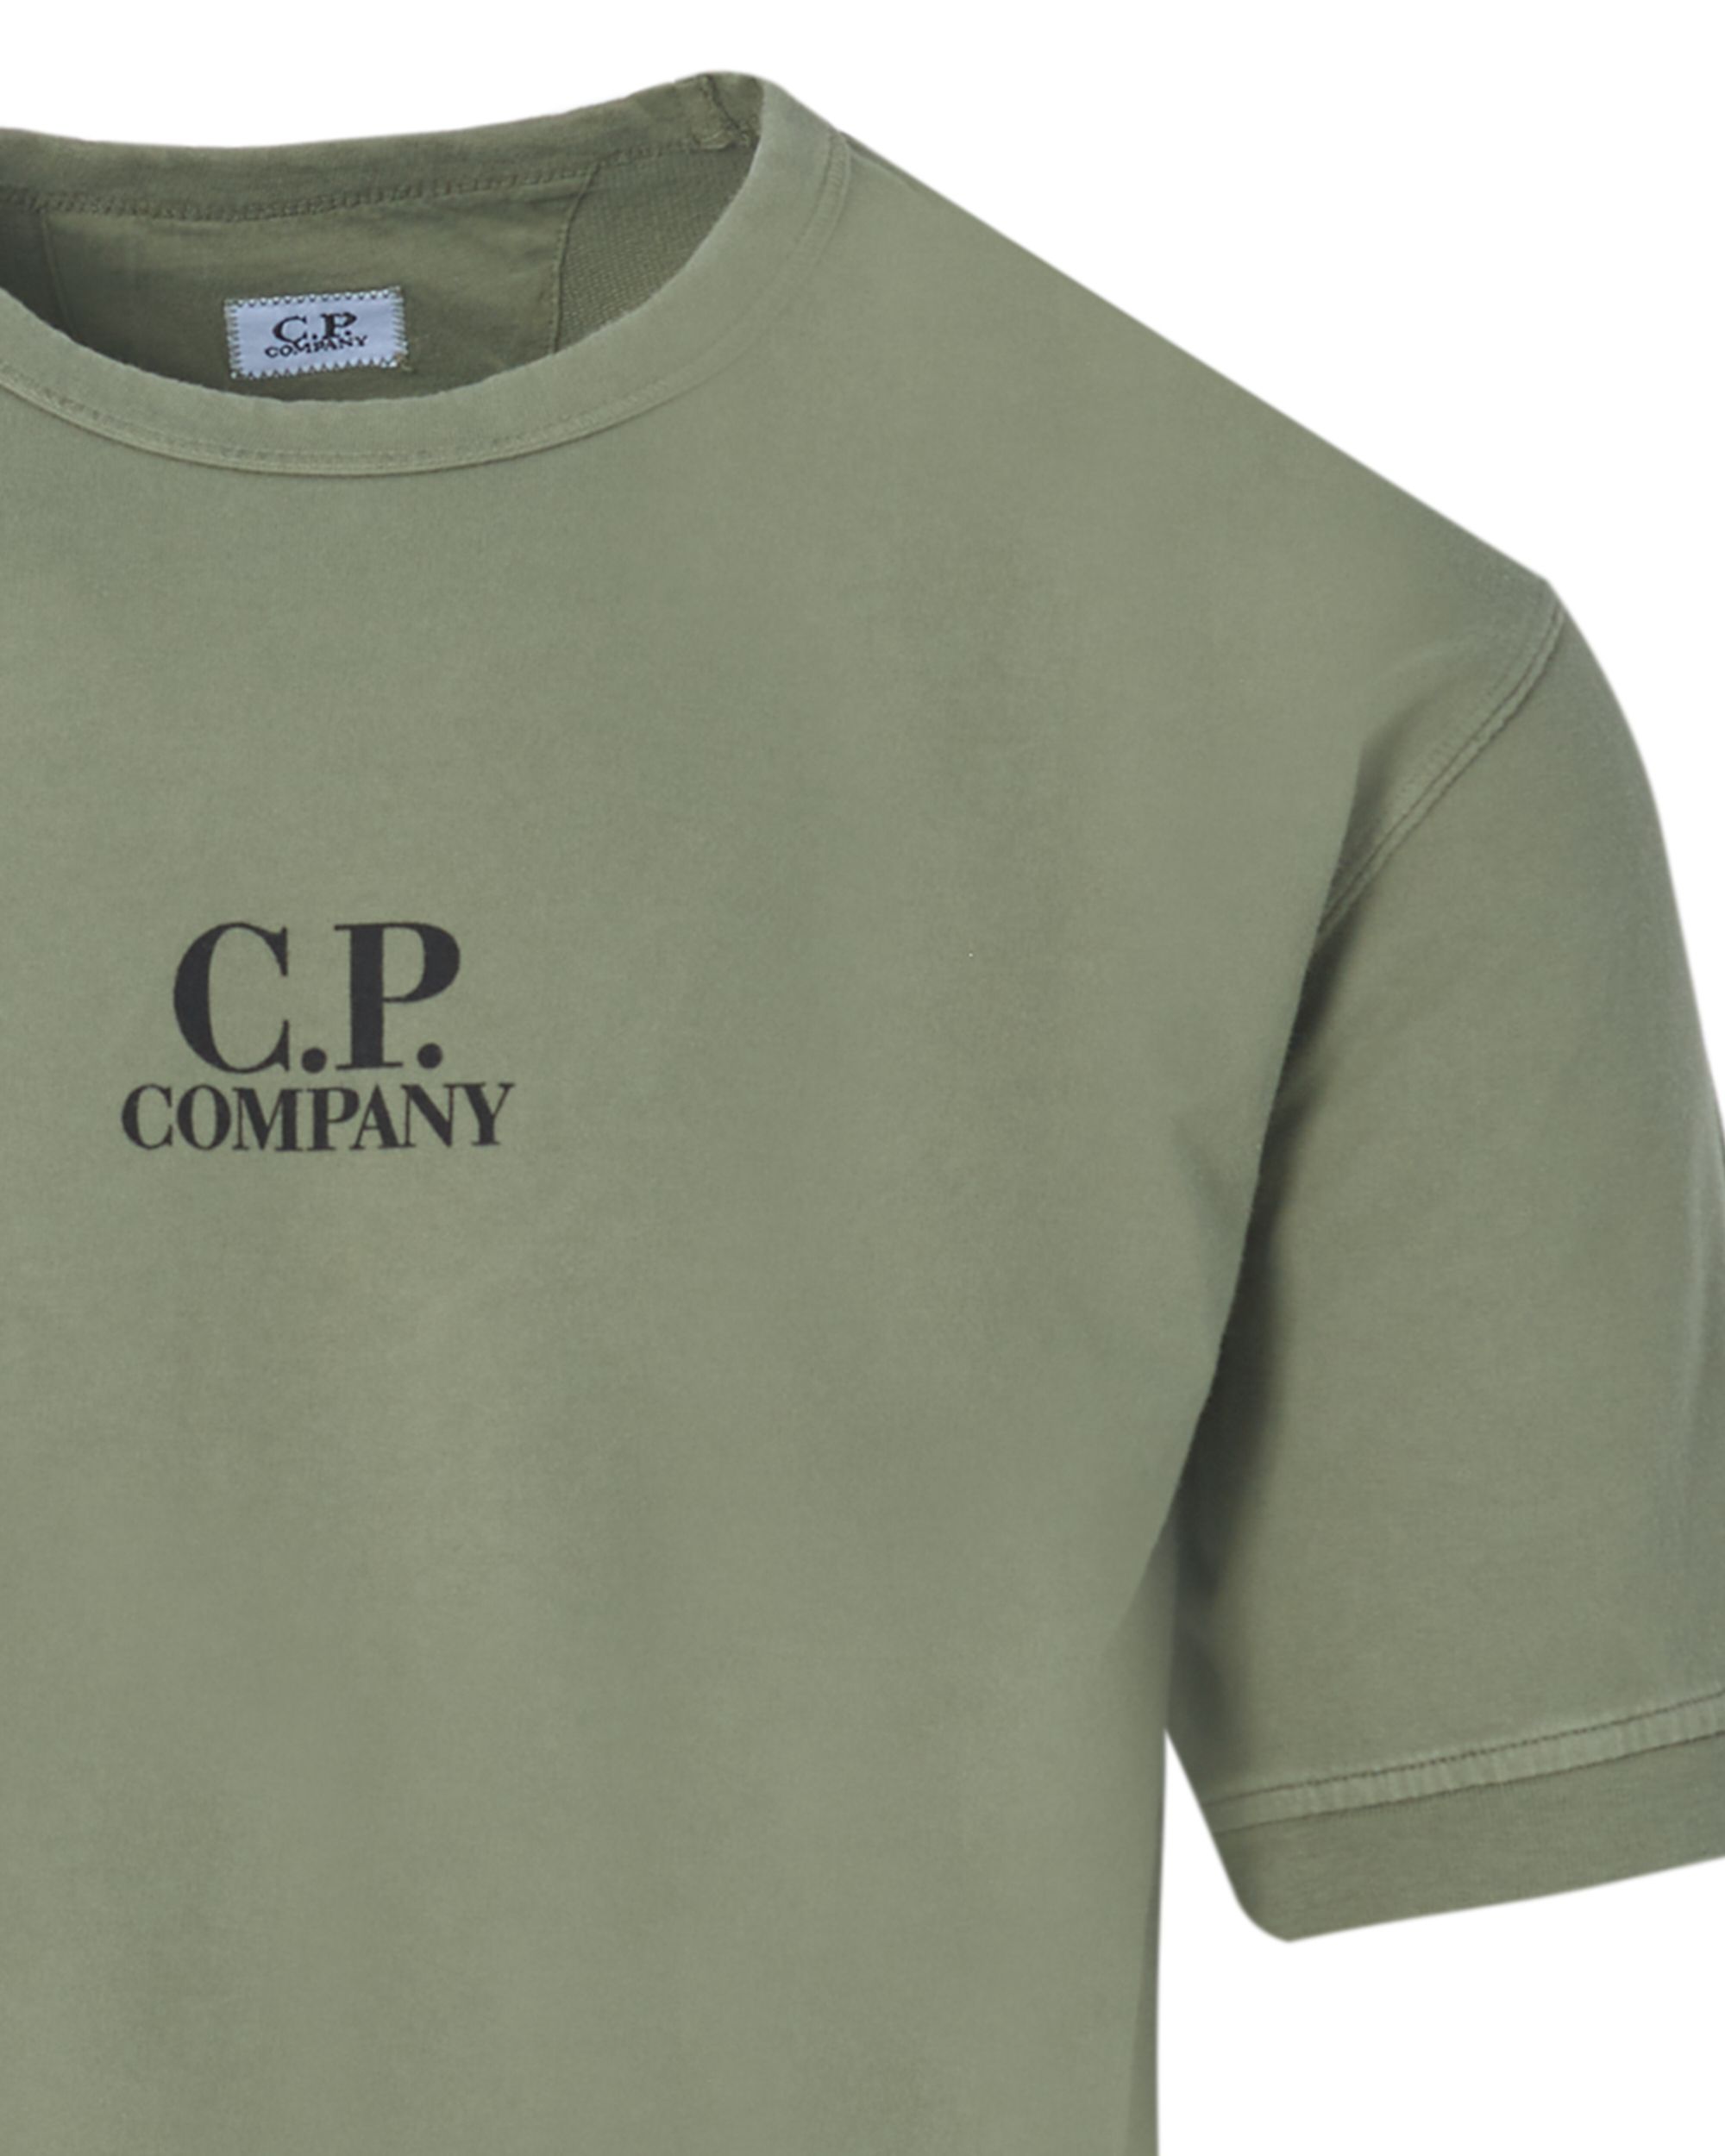 C.P Company T-shirt KM Groen 082489-001-L